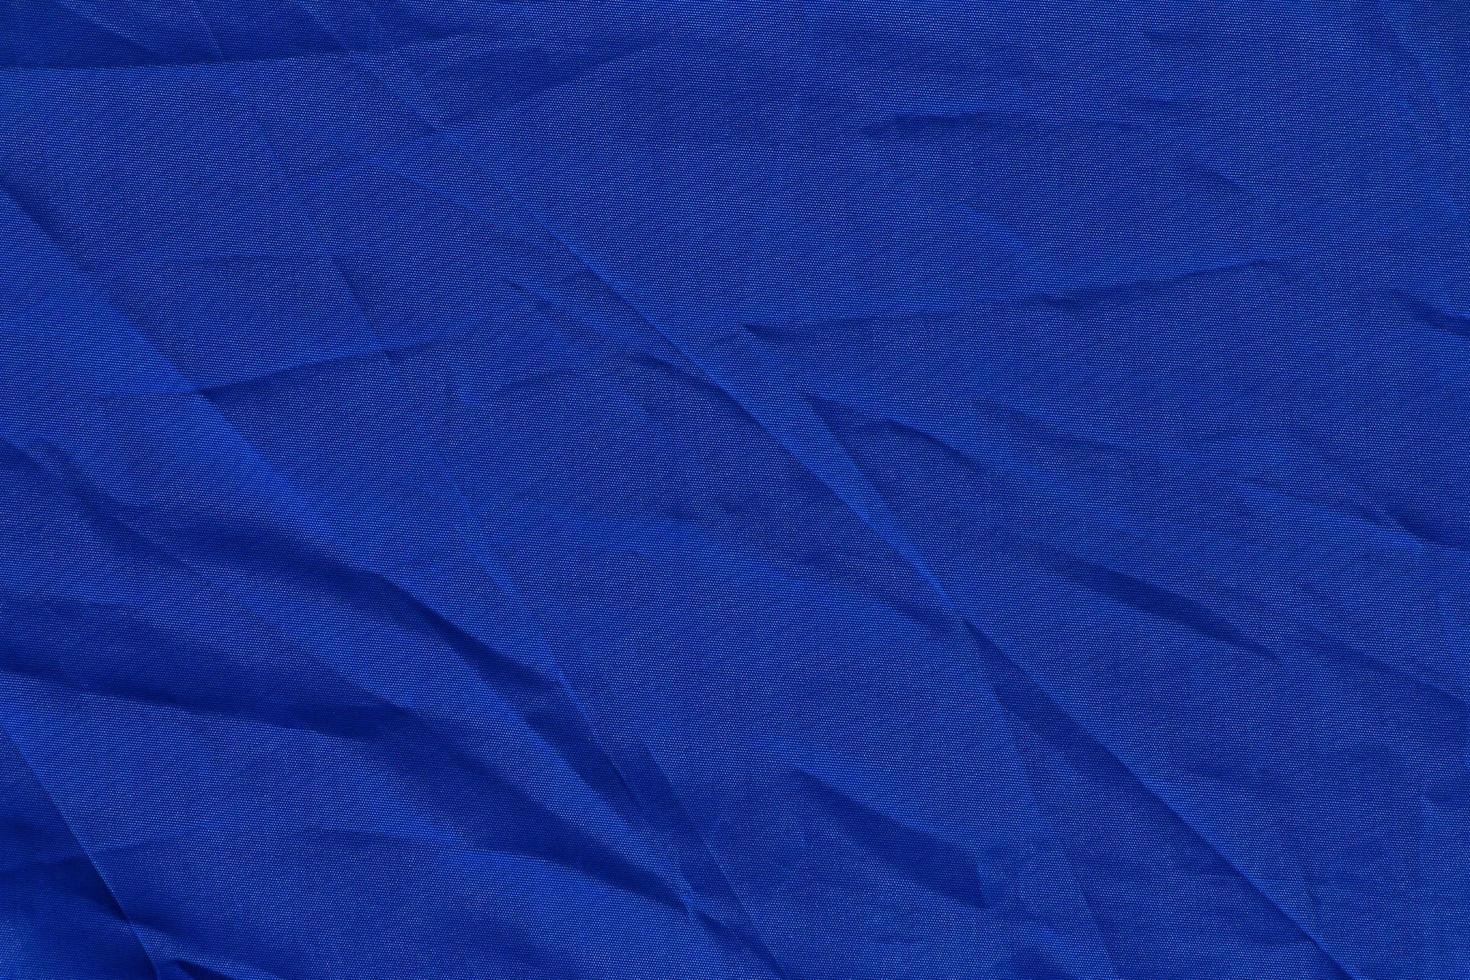 close up of dark blue crumpled fabric texture photo